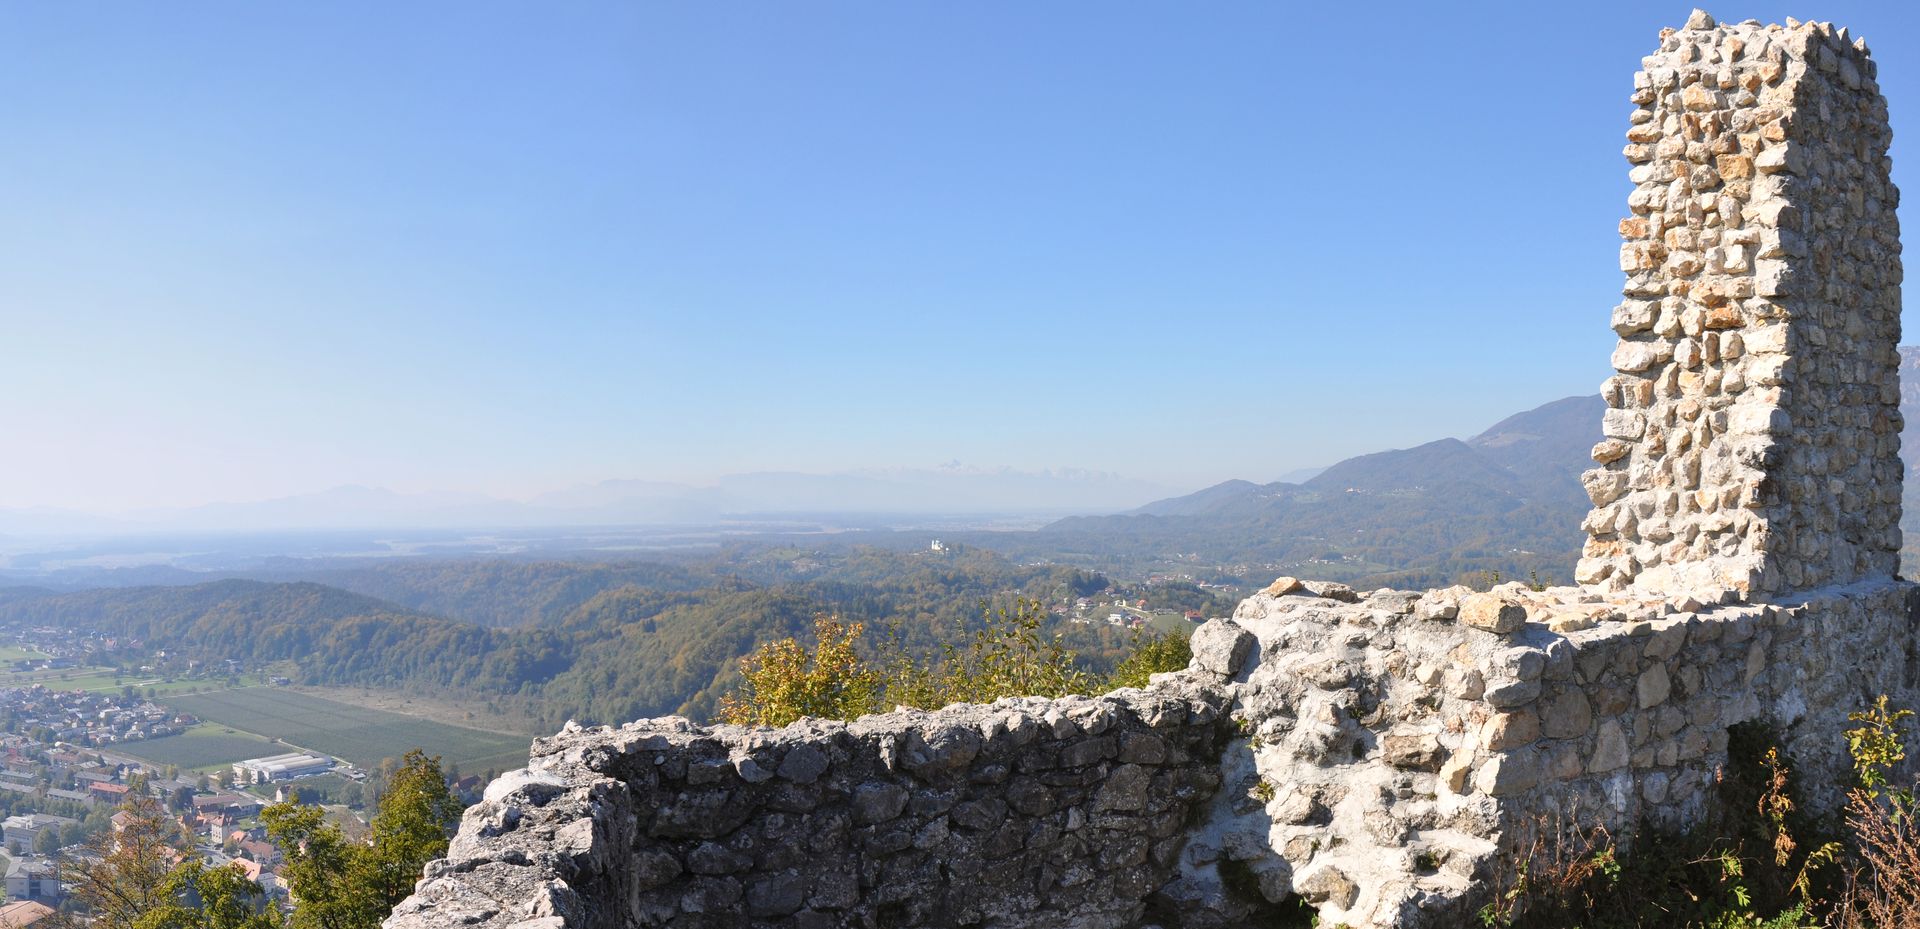 The ruins of Stari Grad (Old Castle) near Kamnik, Slovenia Photo: Flickr user alukasev